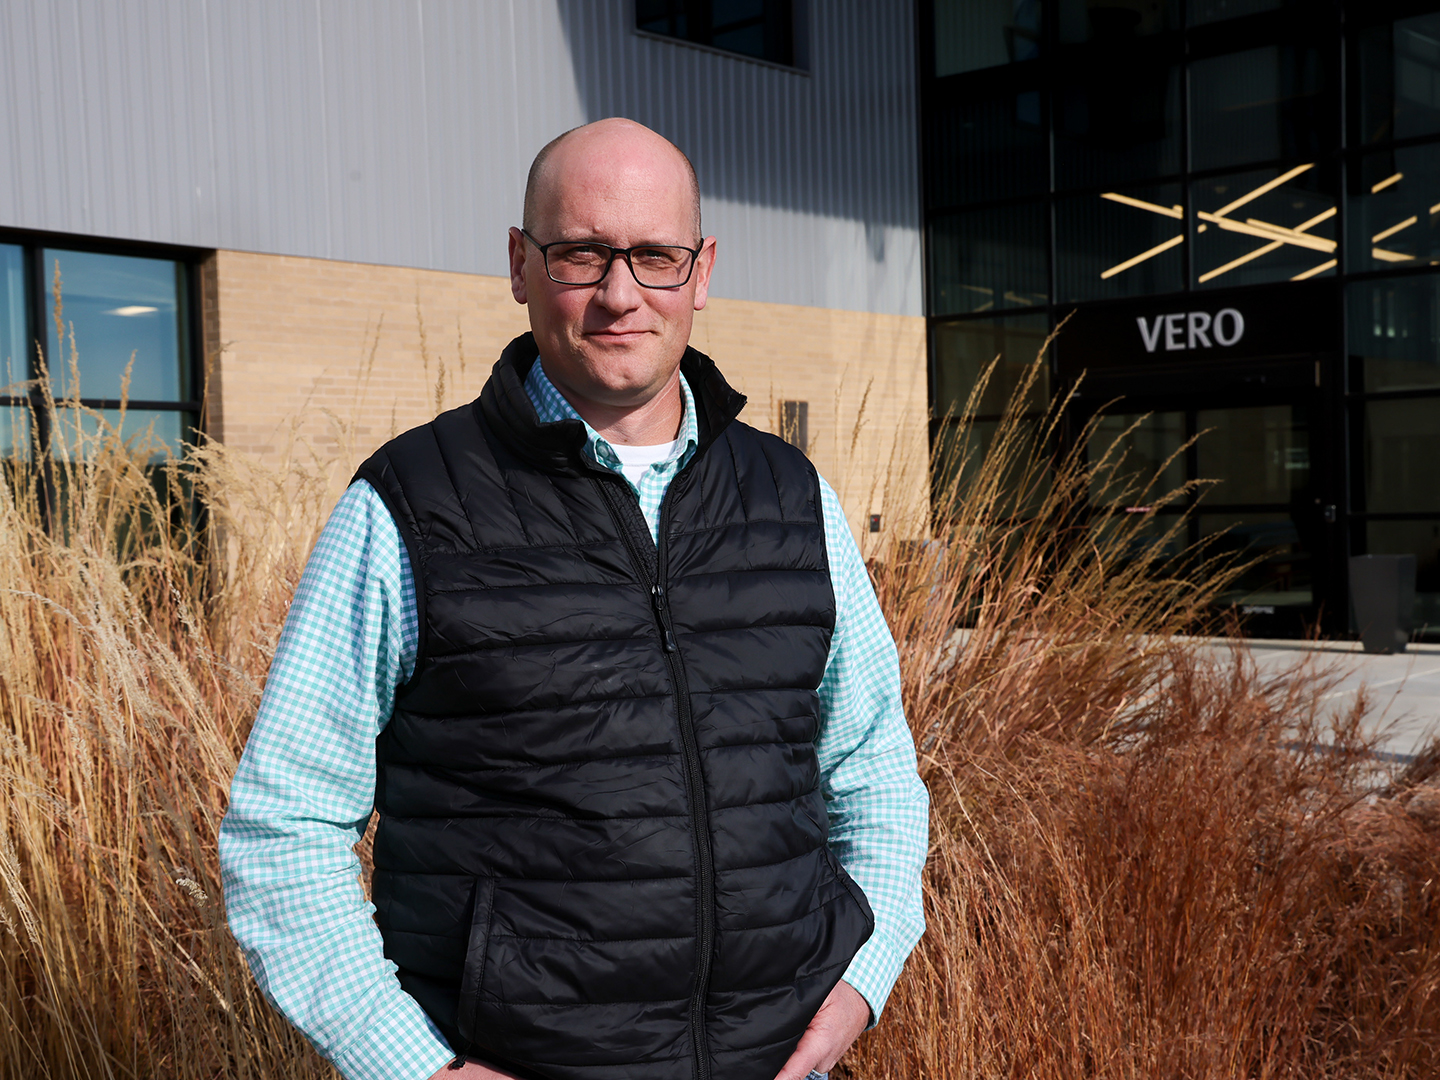 Dr. Michael Kleinhenz in front of the VERO building